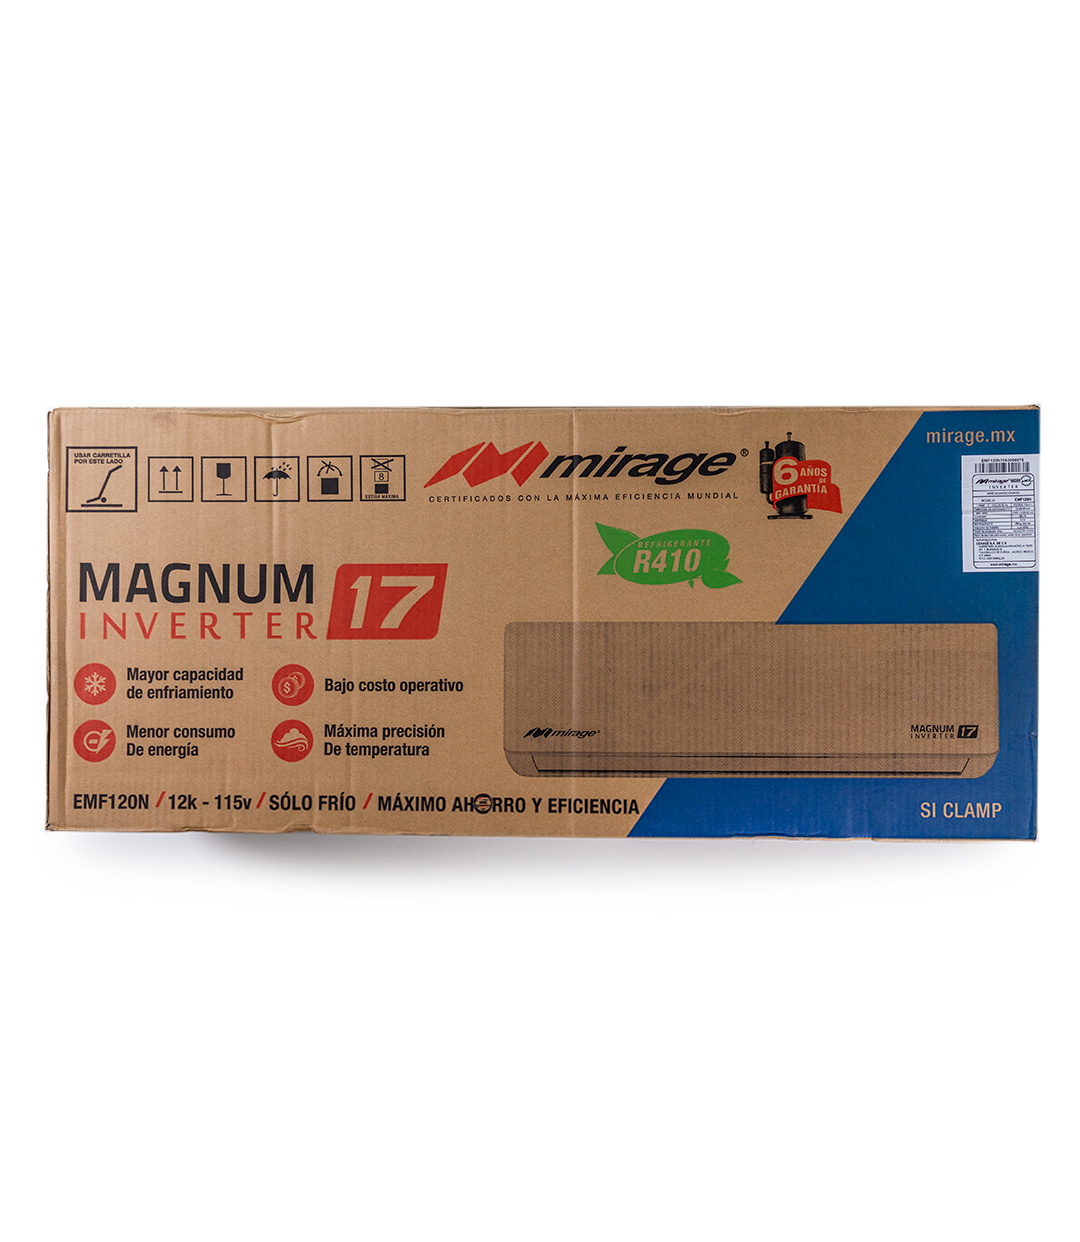 Magnum 17 1 Tonelada a 110v